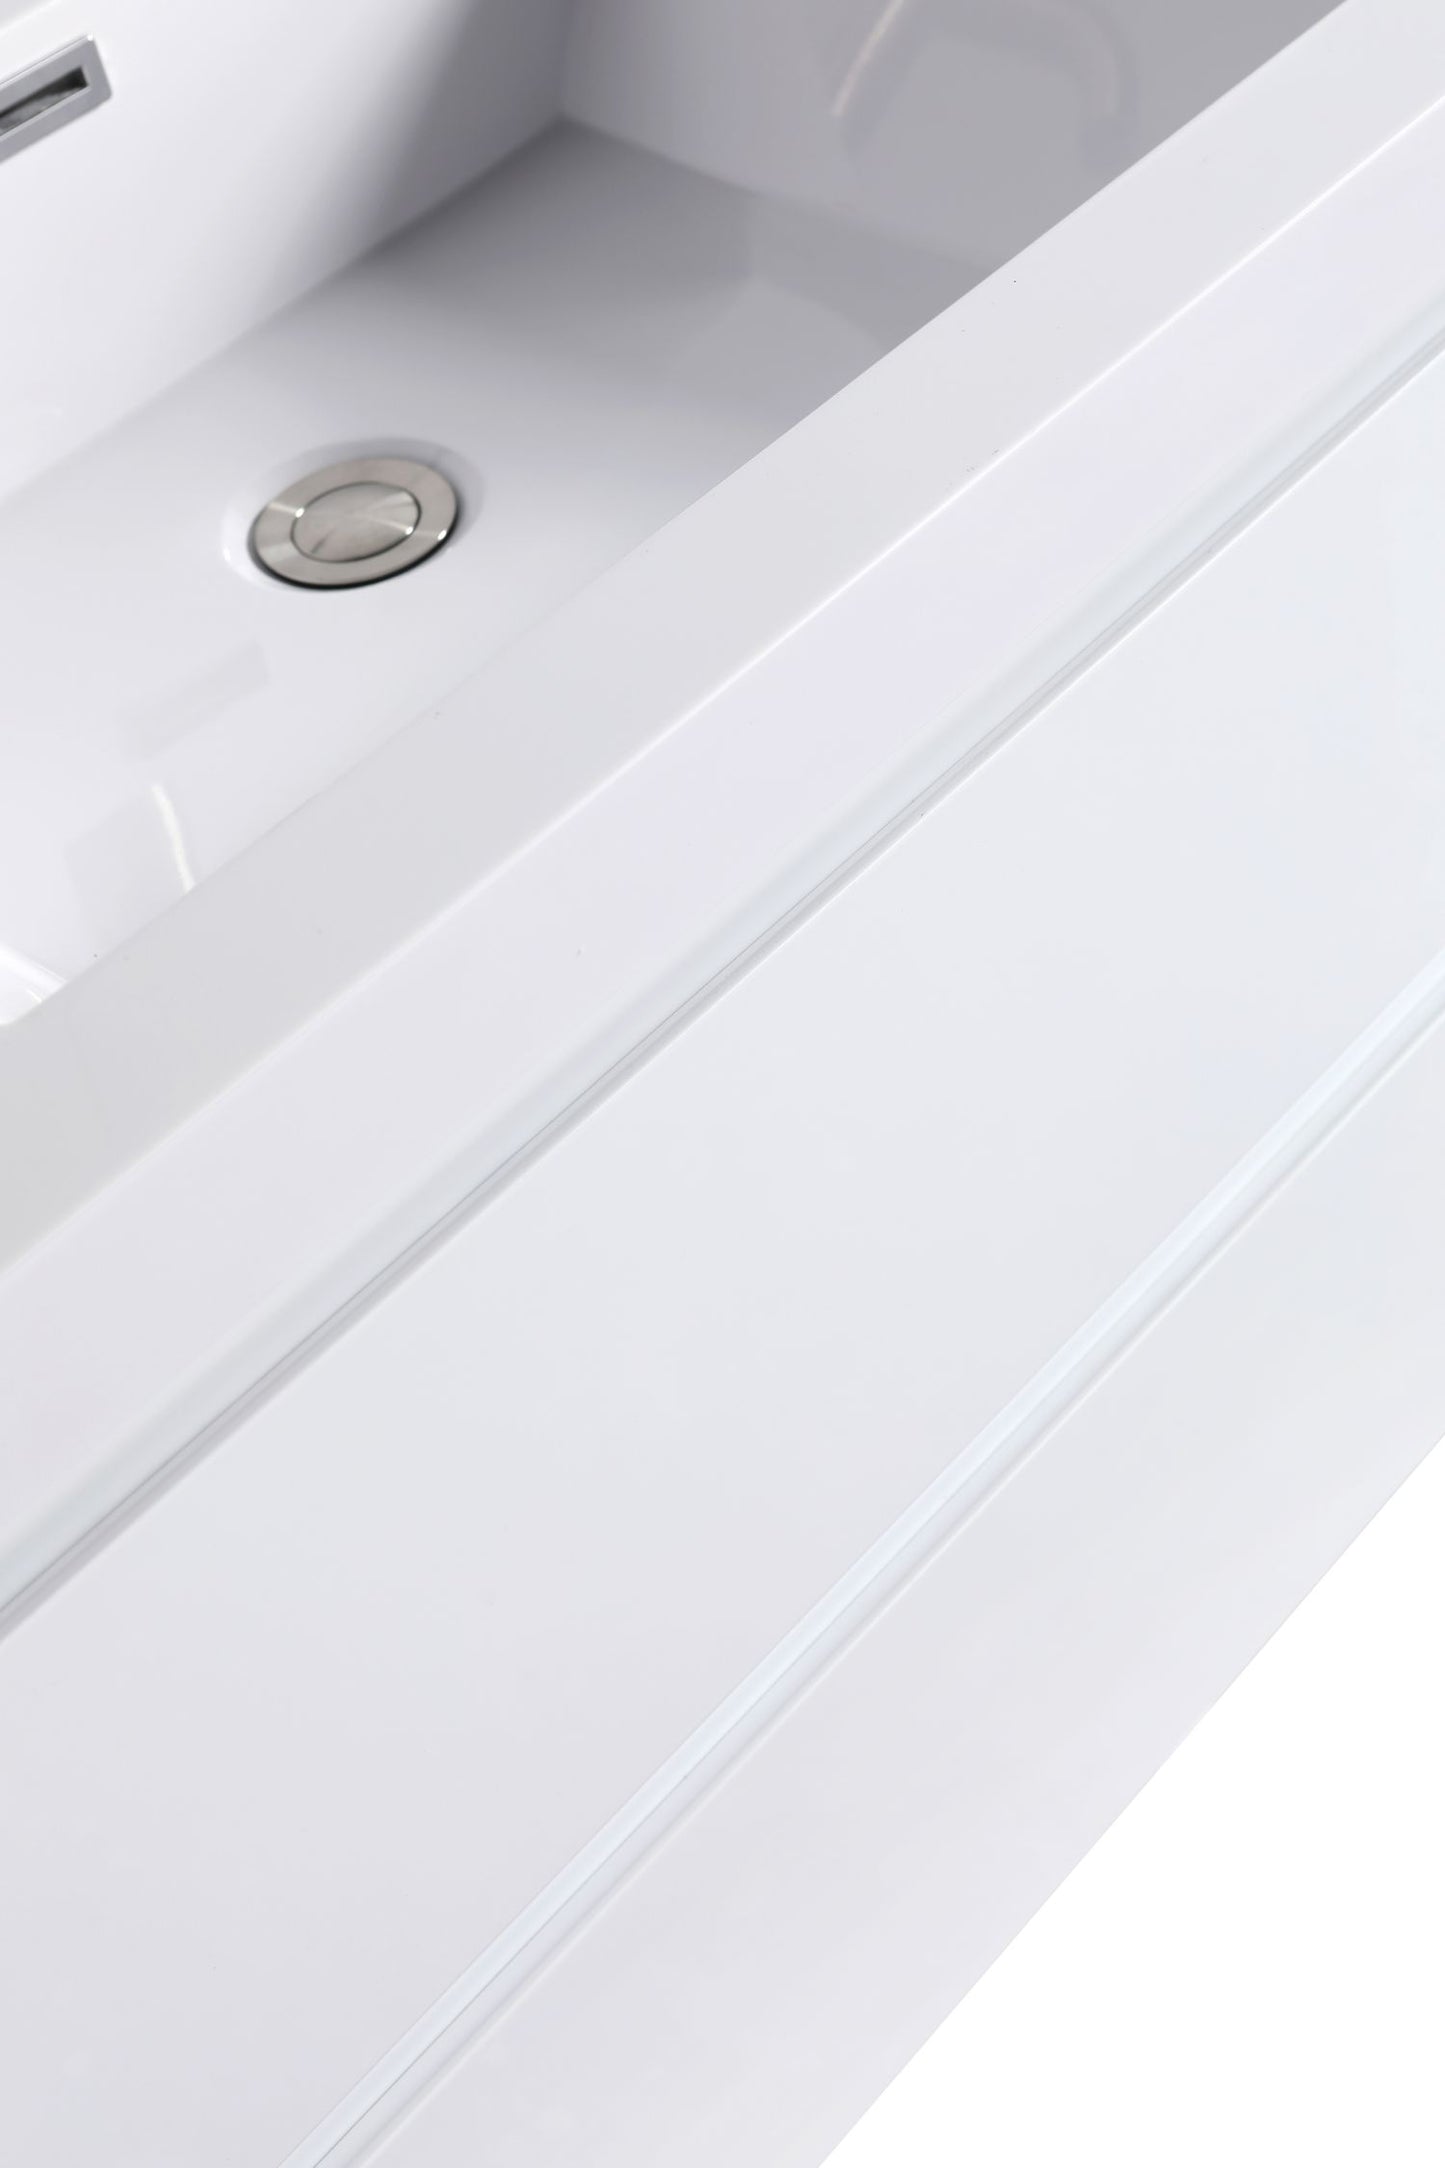 Waterpar® 35.43 in. L x 19.7 in. W x 21.65 in. H White Bathroom Cabinet with Single Resin Sink